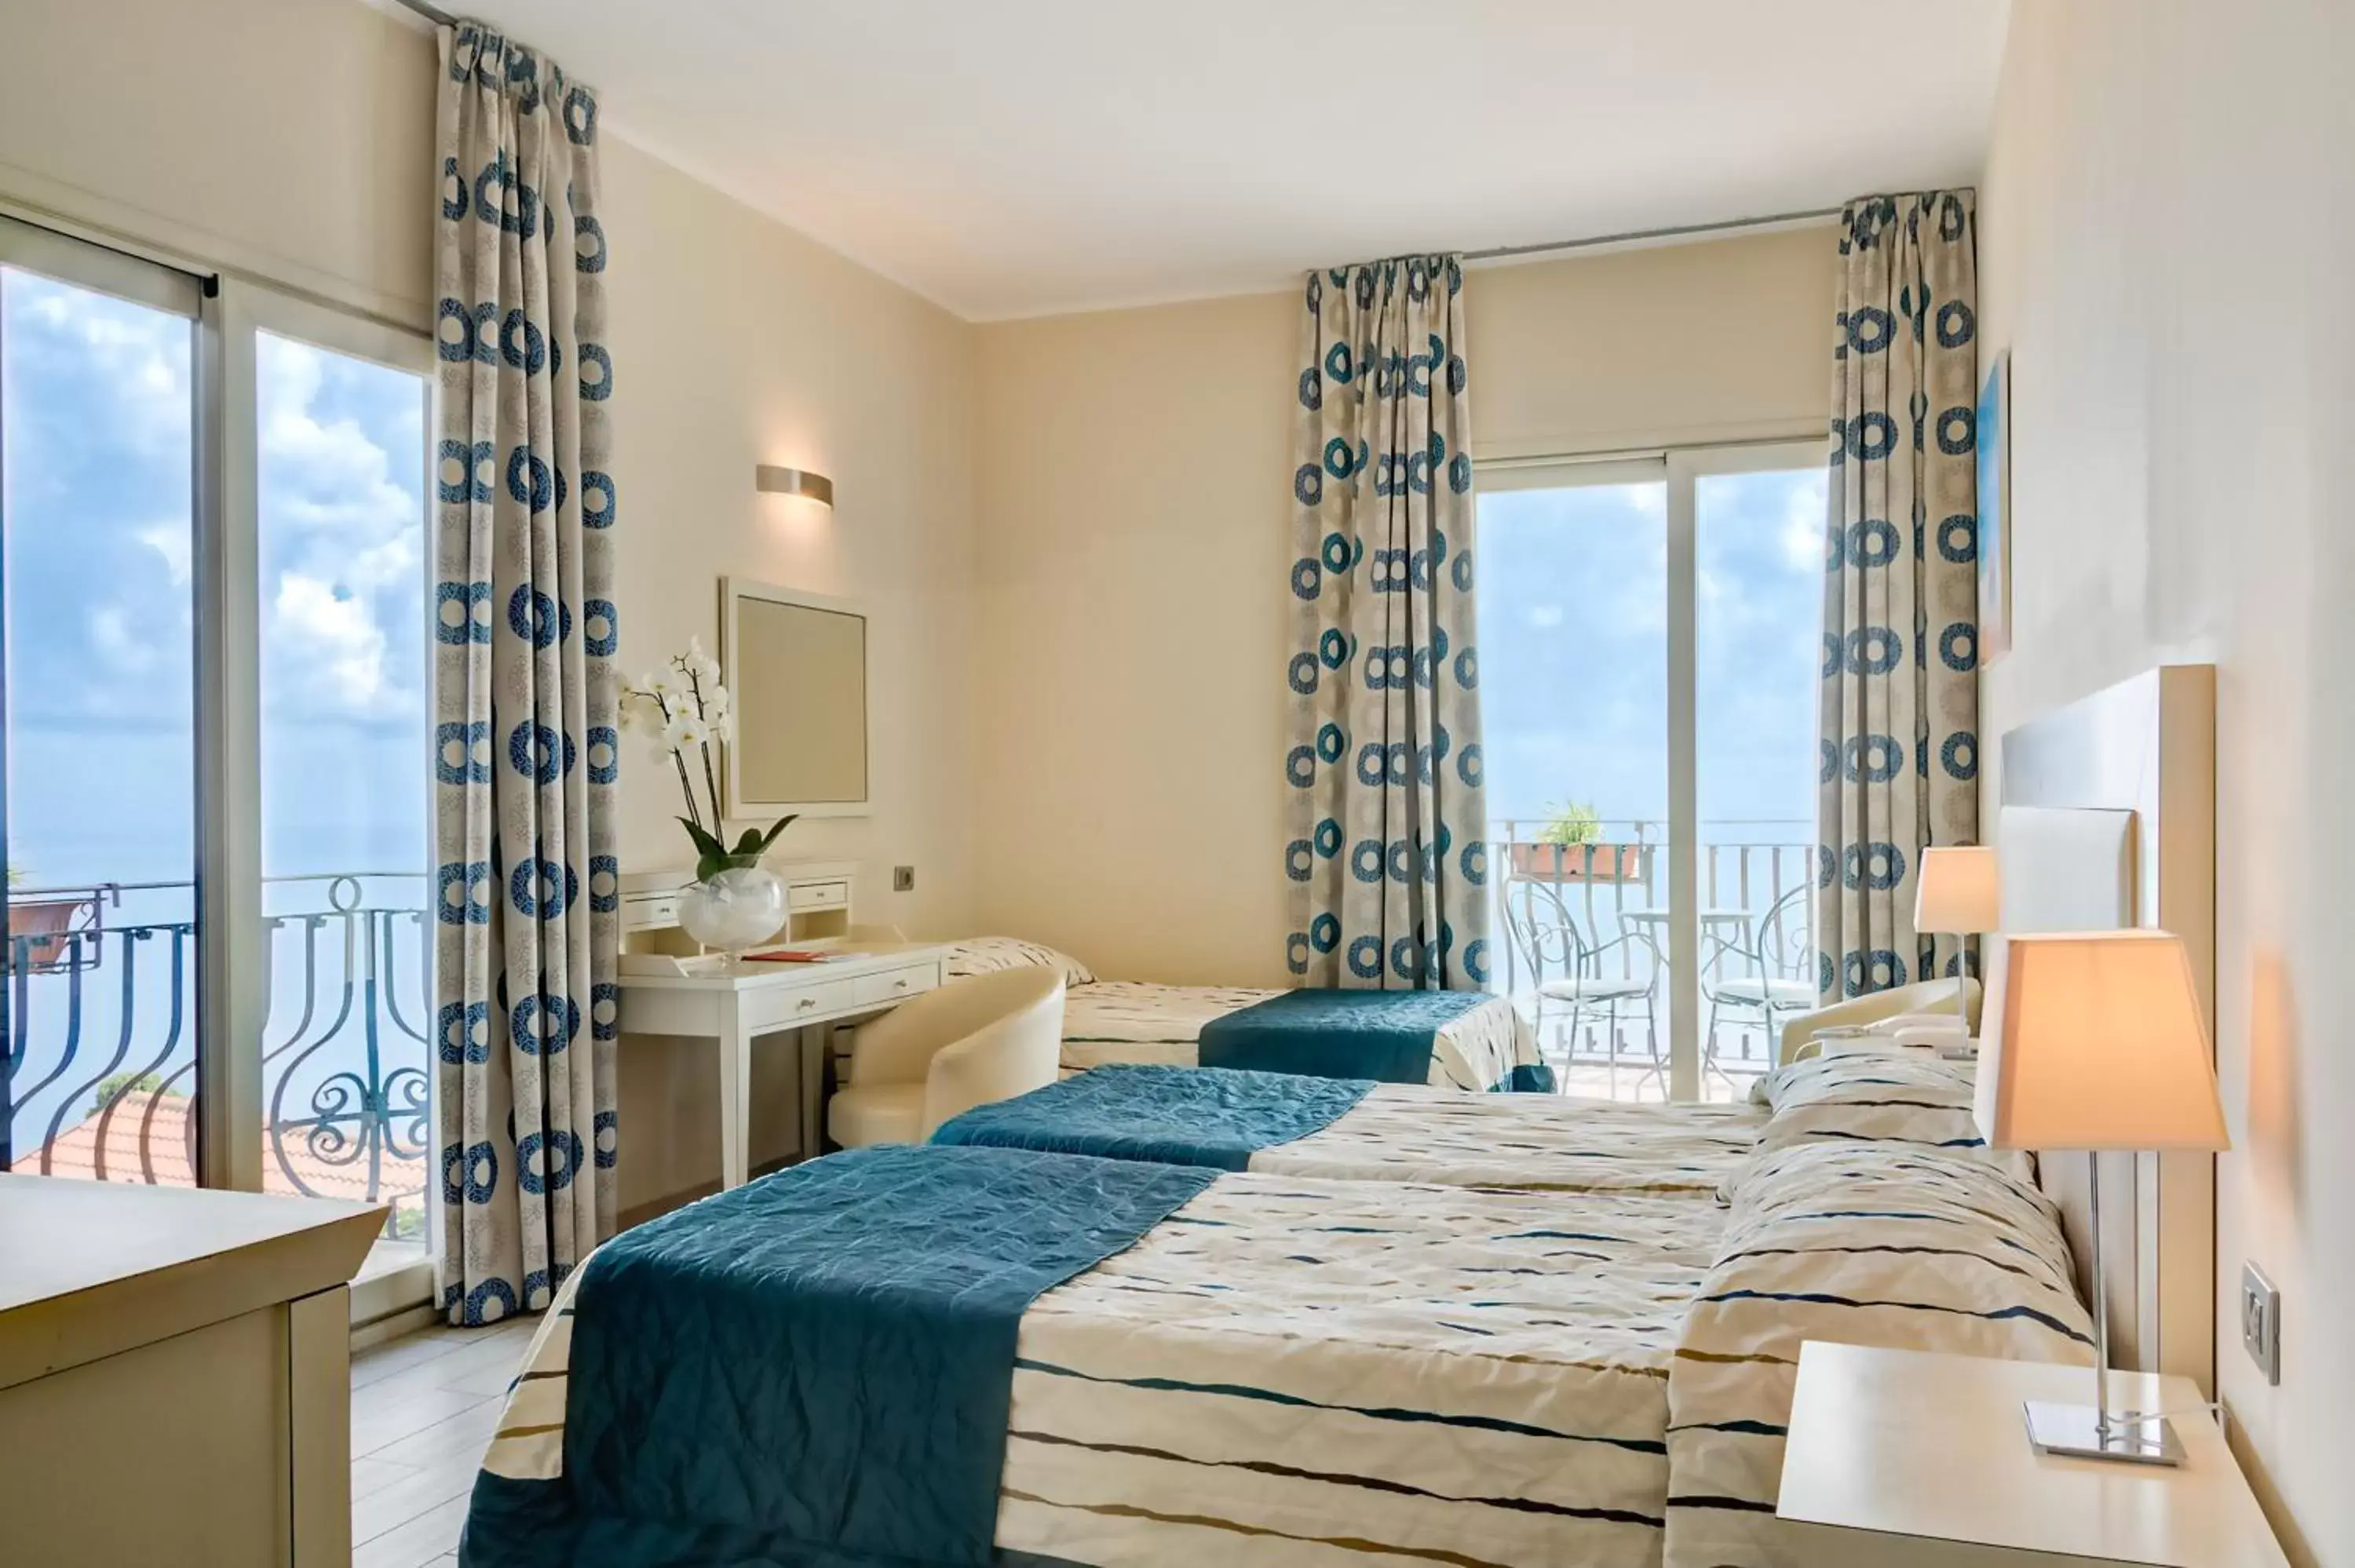 Superior Triple Room with Balcony and Sea View in Hotel Ariston and Palazzo Santa Caterina